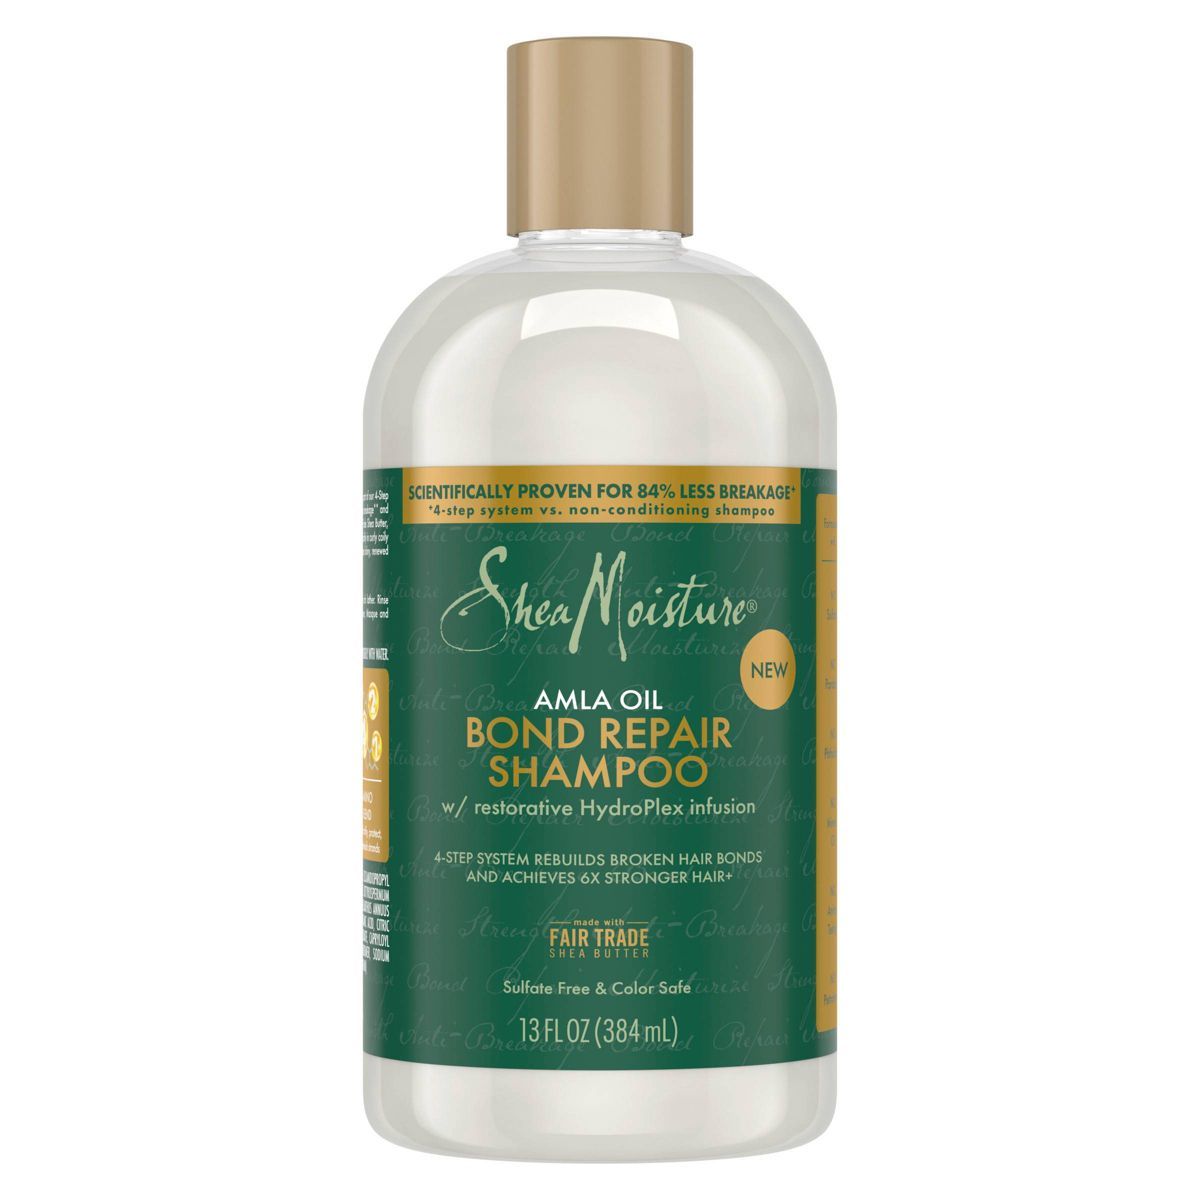 SheaMoisture Bond Repair Shampoo - 13 fl oz | Target